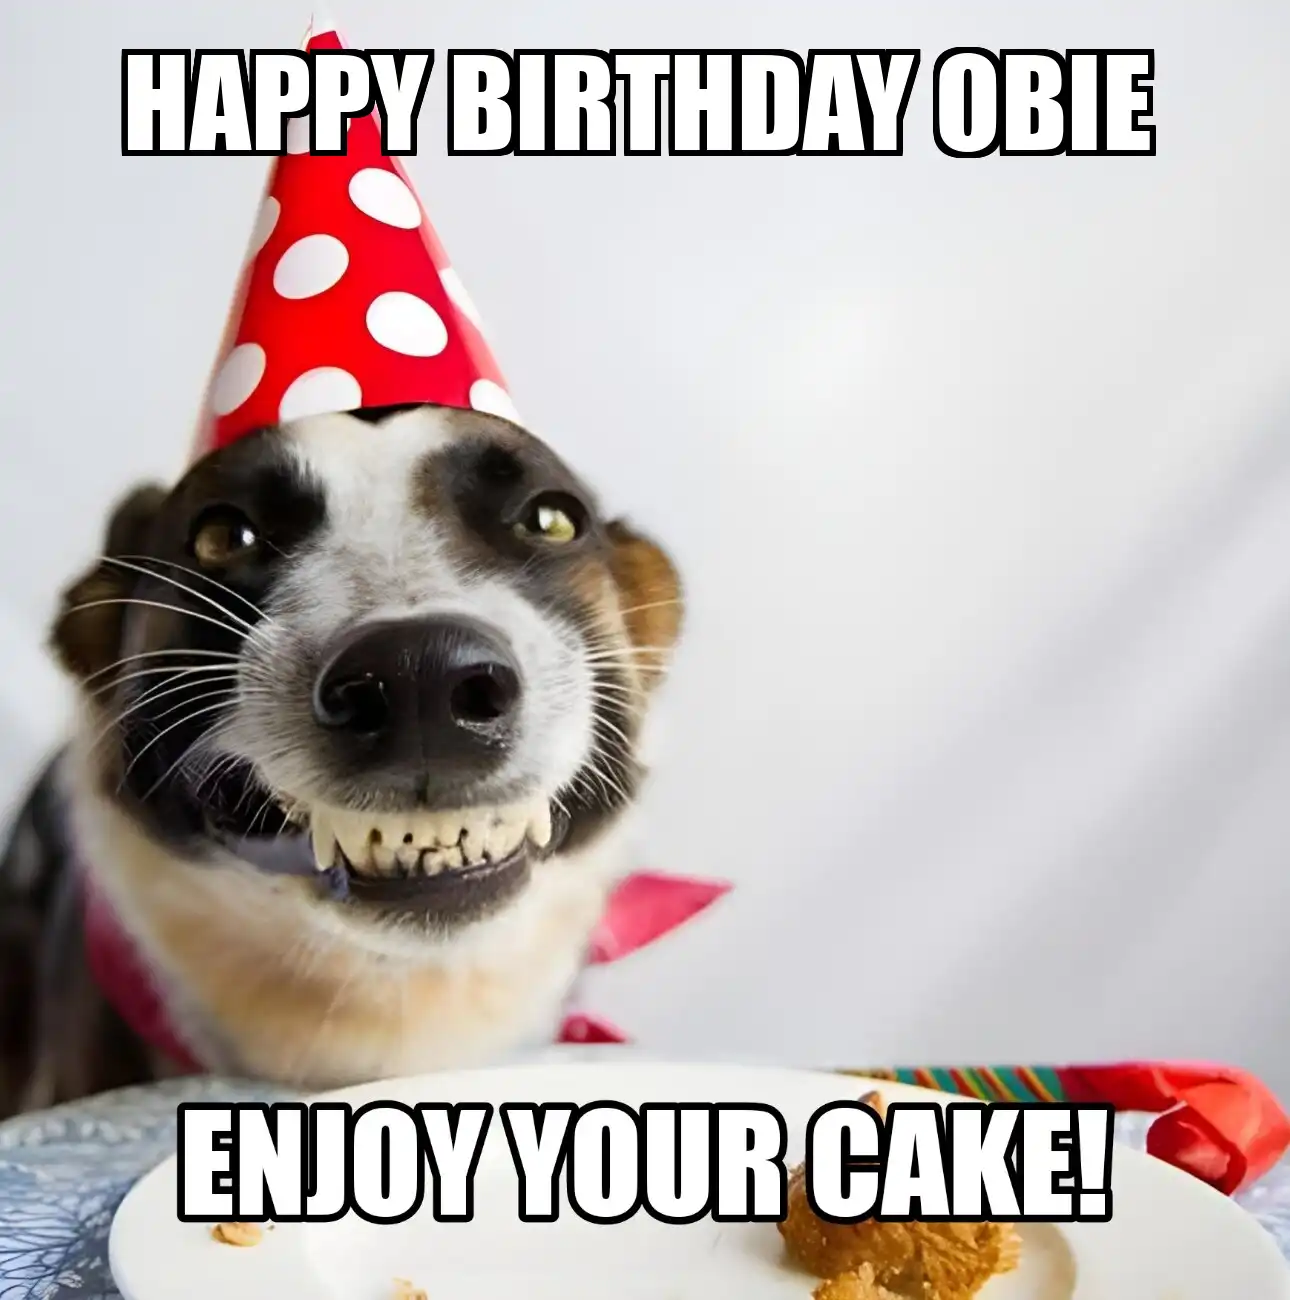 Happy Birthday Obie Enjoy Your Cake Dog Meme